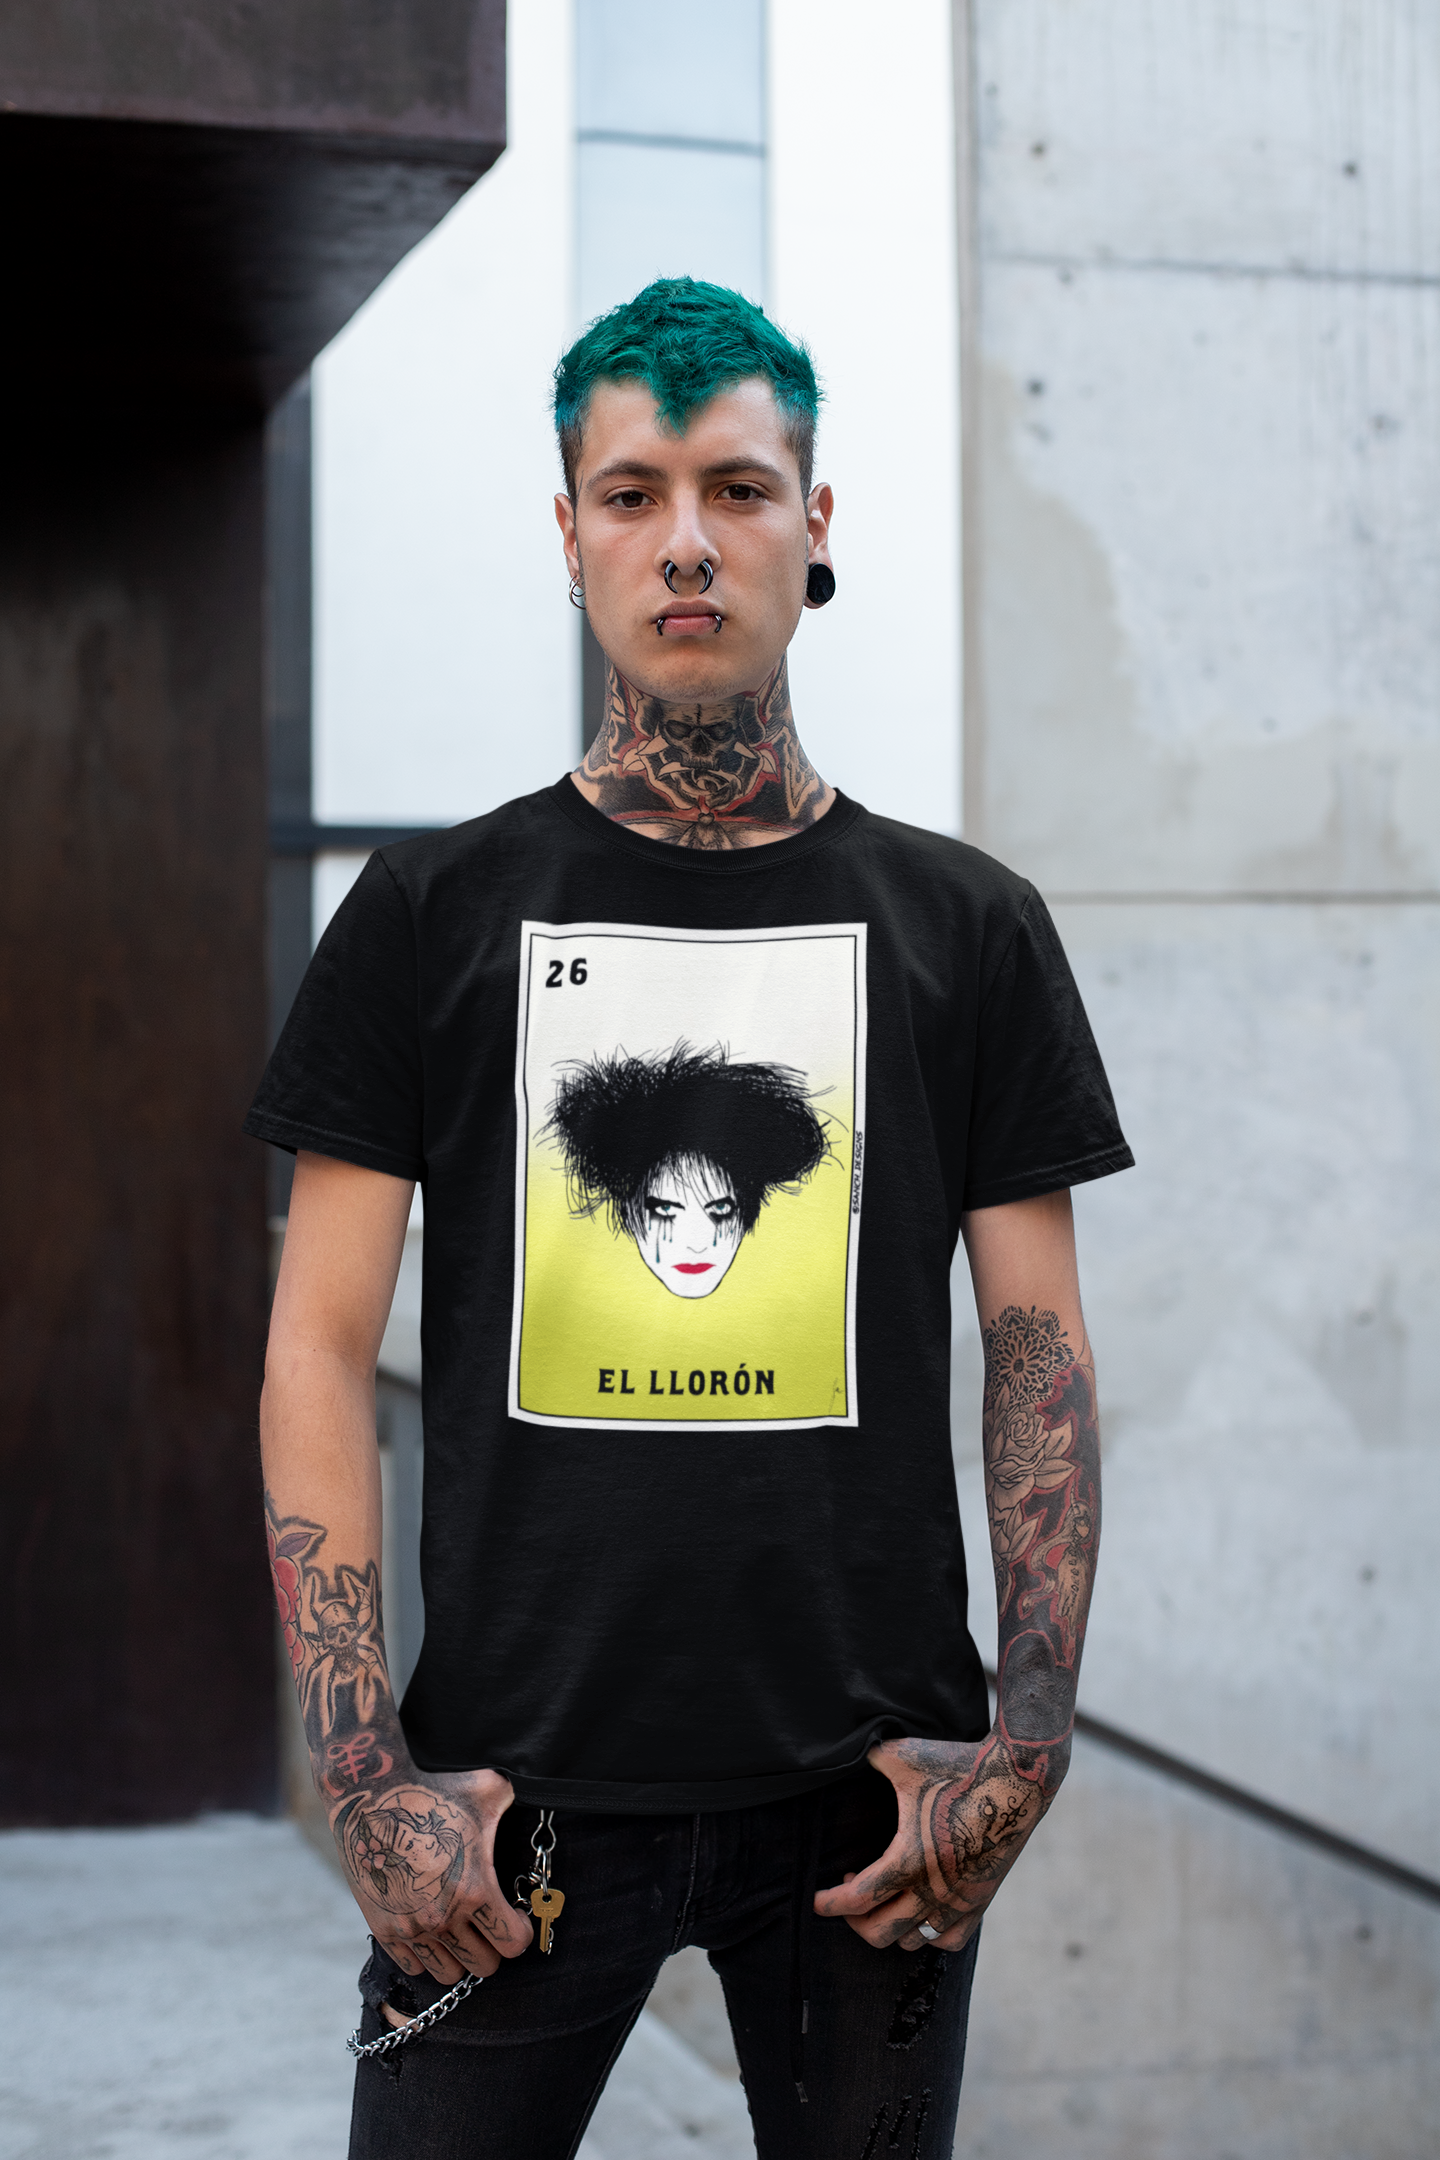 The Cure/Loteria Mashup Short-Sleeve Unisex T-shirt